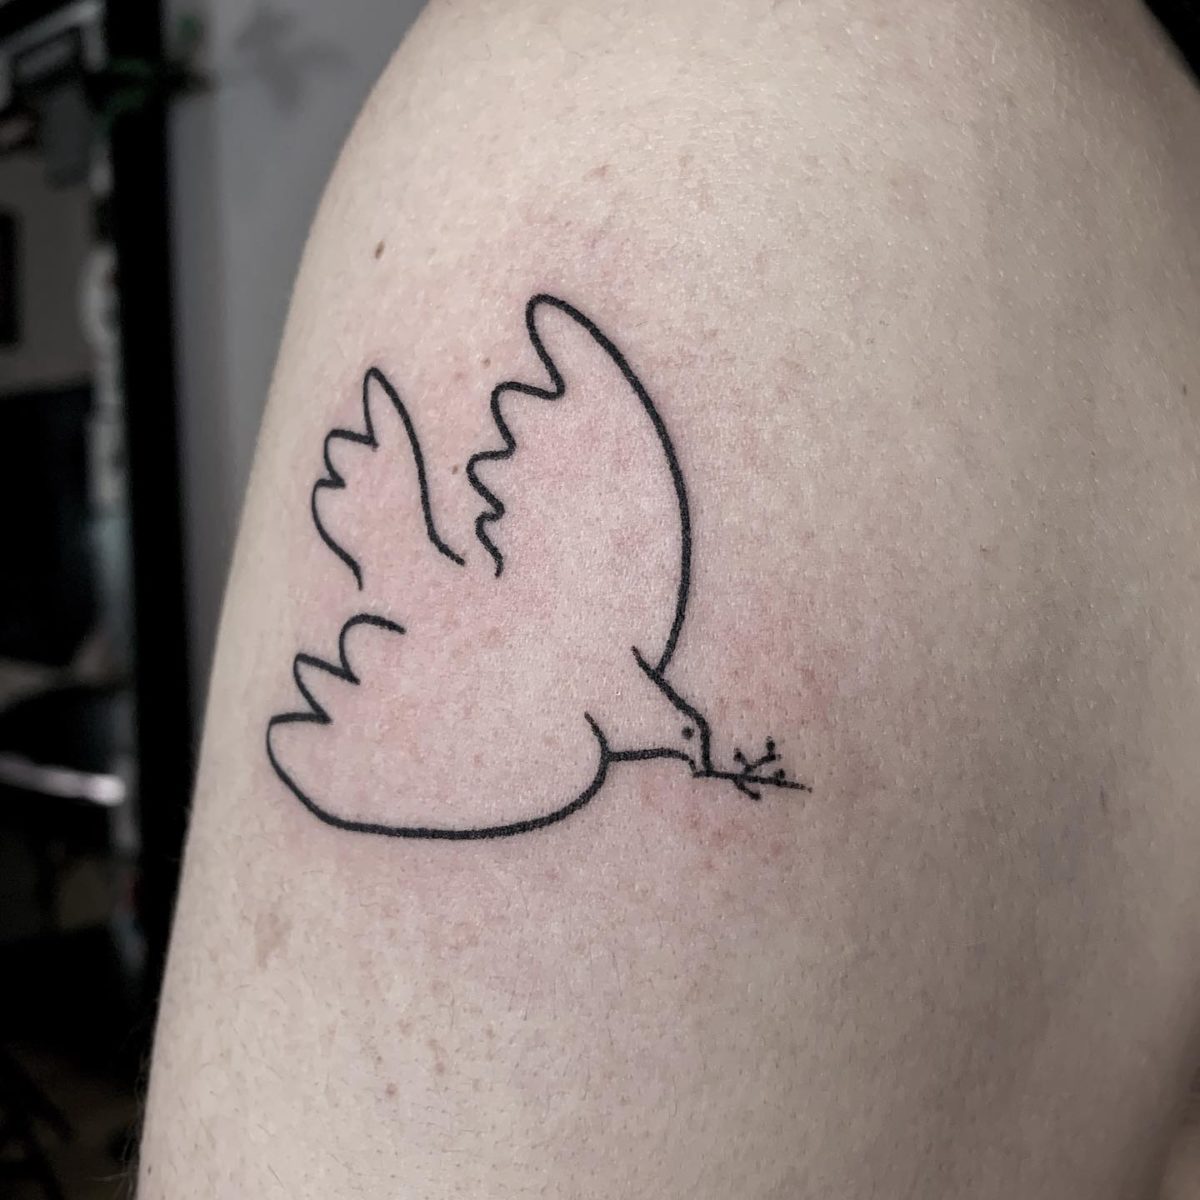 meaningful tattoo ideas